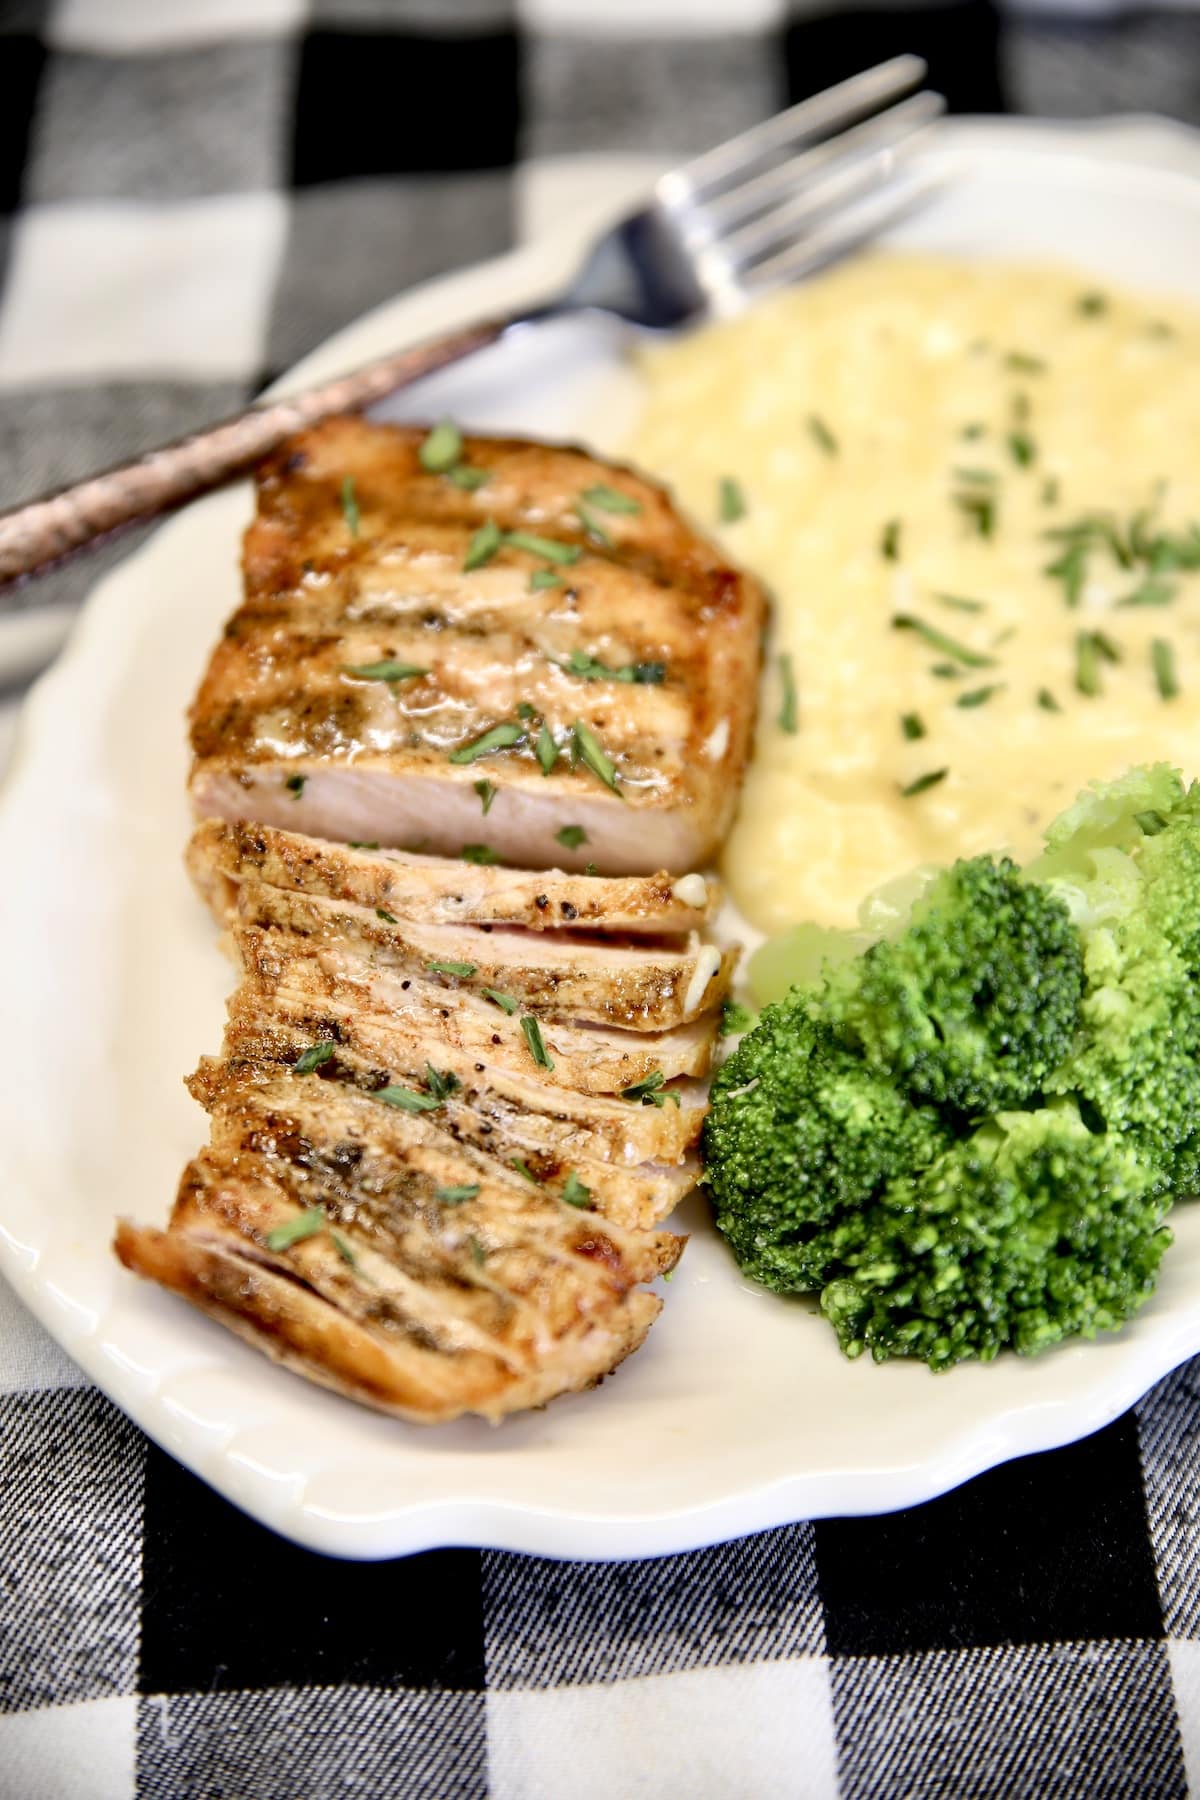 Plate with sliced pork chop, broccoli, potatoes.